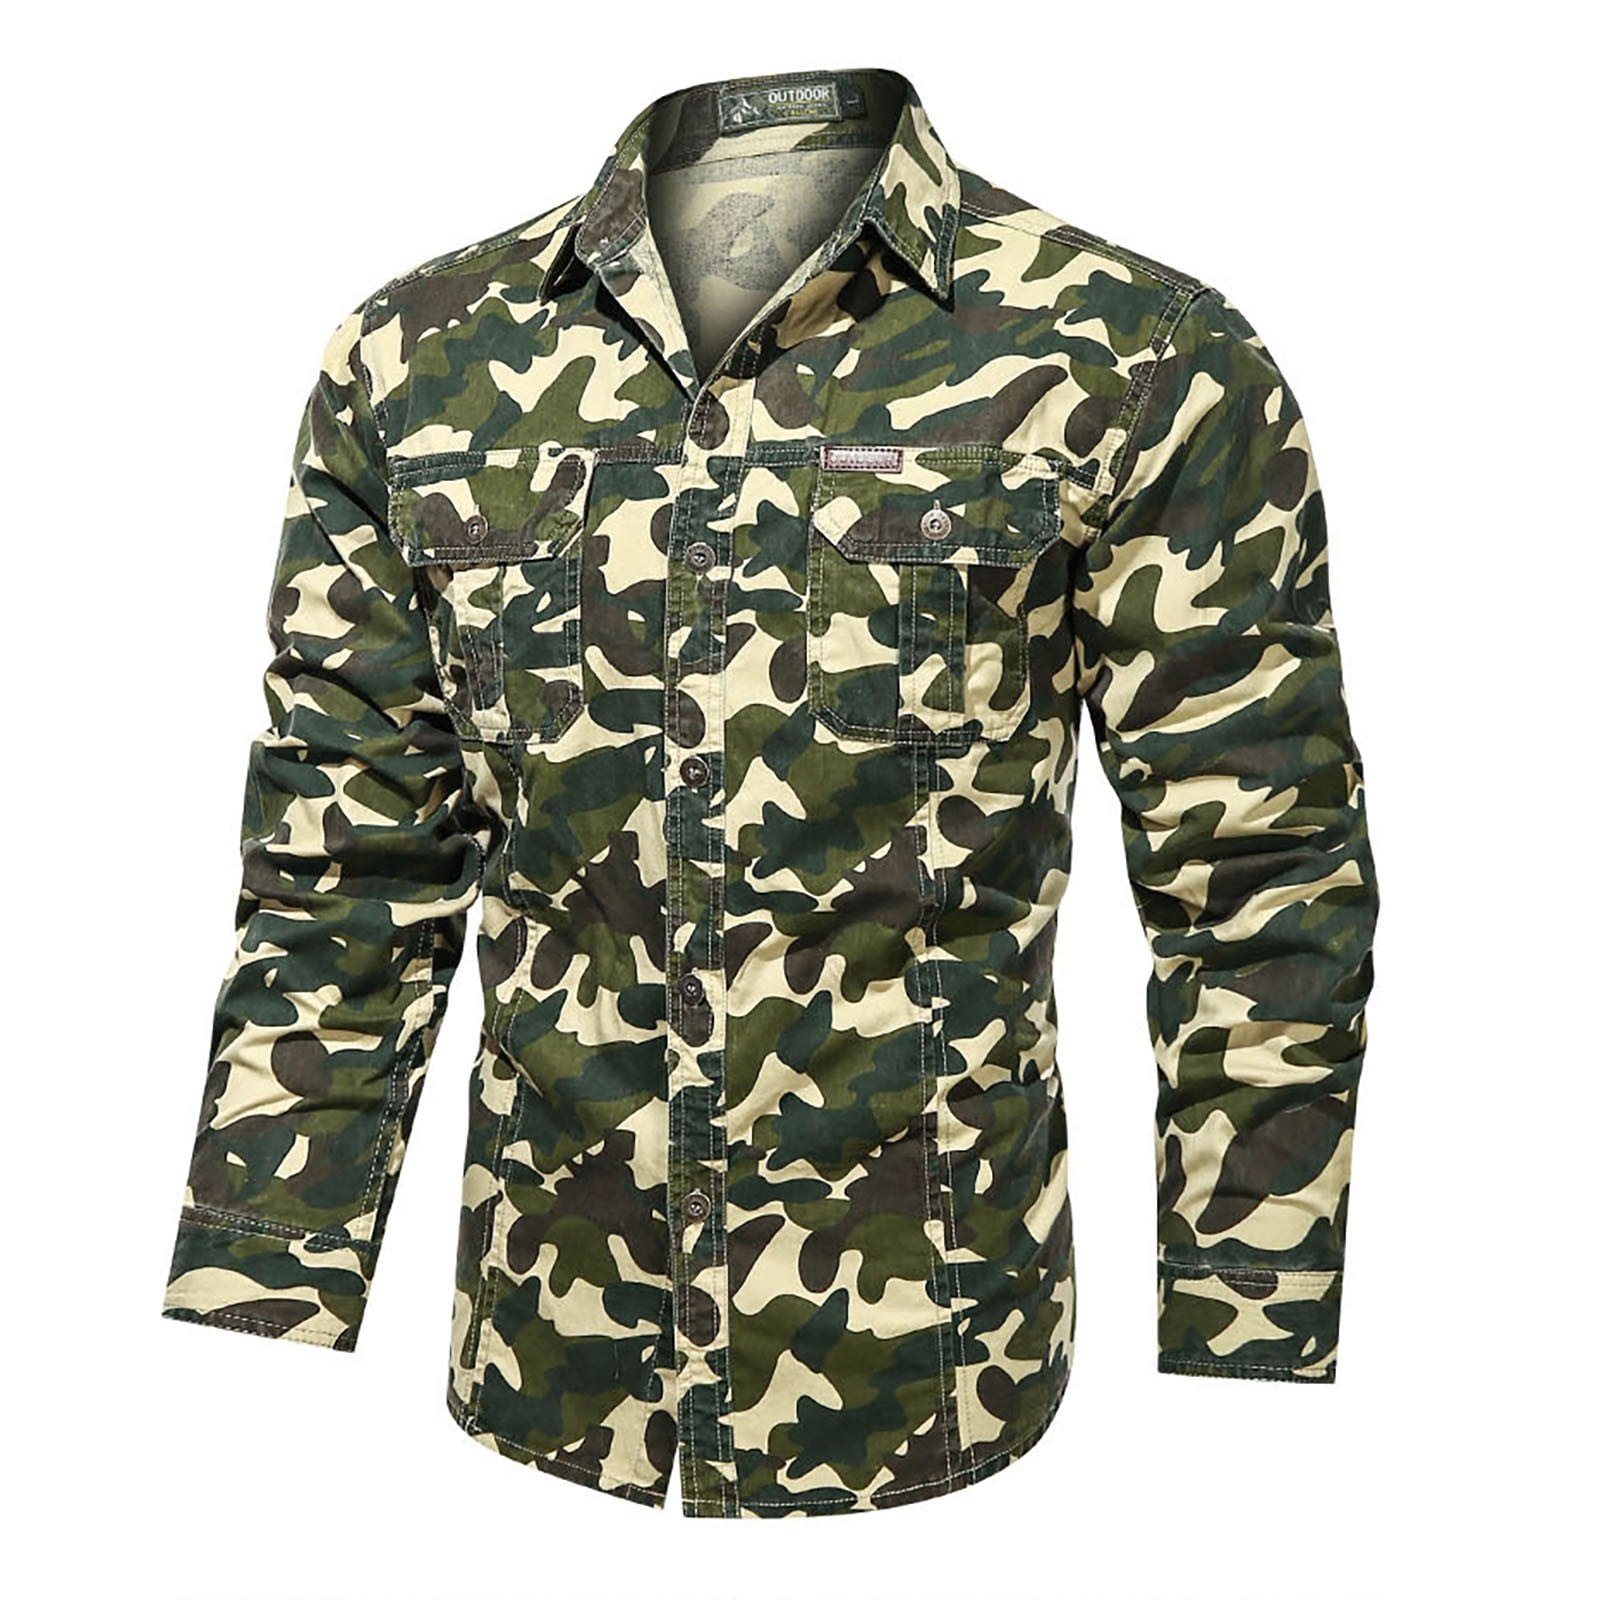 YYDGH Men's Camouflage Denim Shirt Camo Washed Military Long Sleeve Shirts  Button Down Hunting Printed Cargo Shirt Tops(Khaki,M)